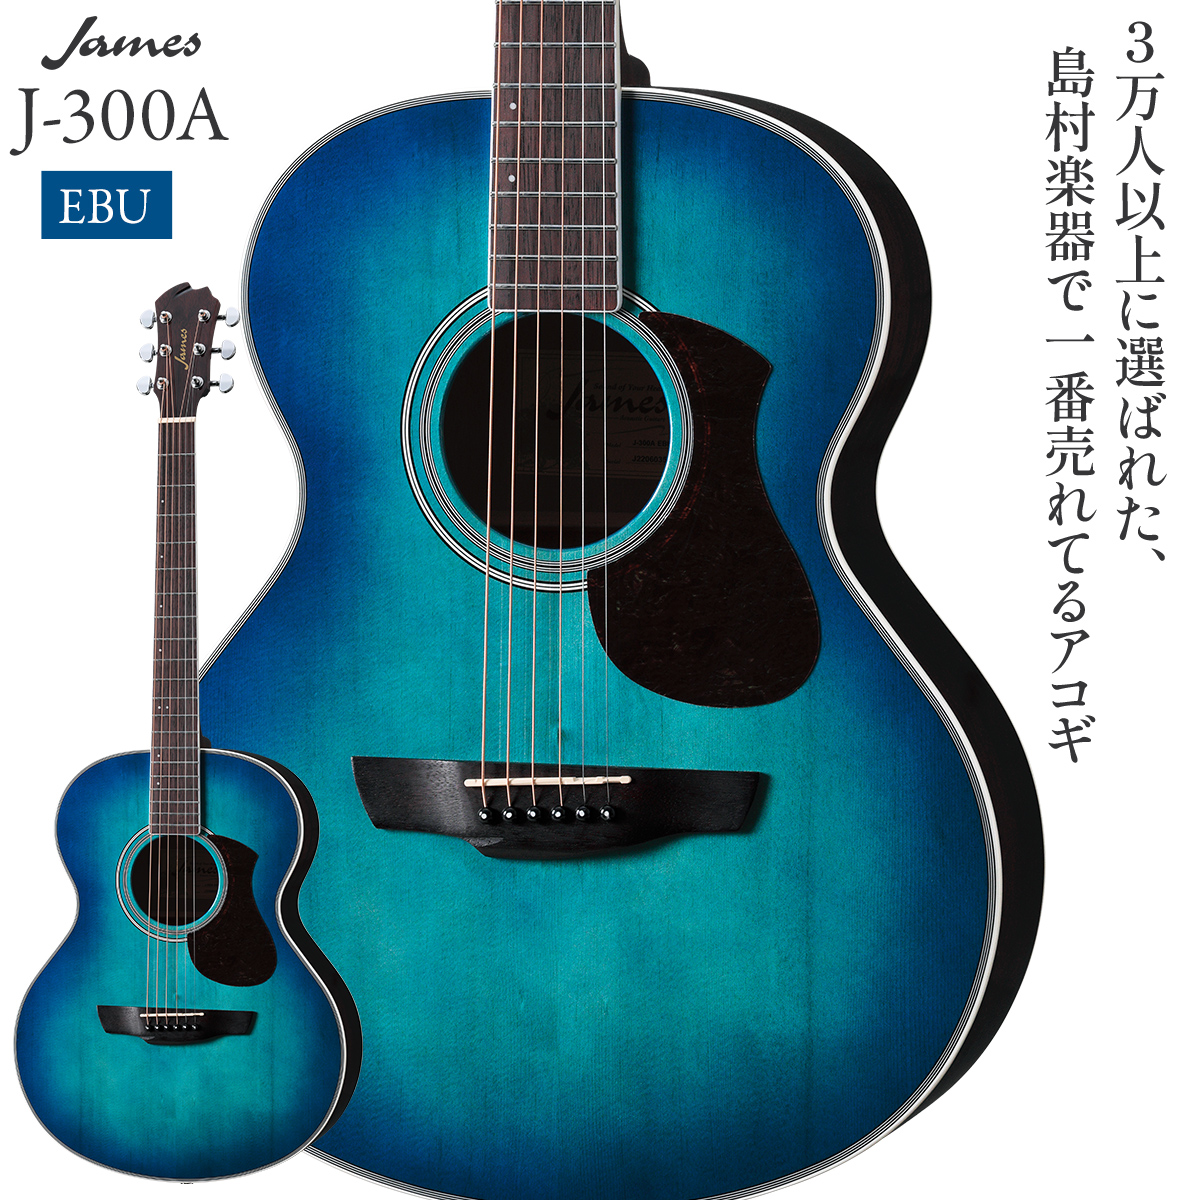 James J-300A EBU (アースブルー) アコースティックギター 【ジェームス】 - 島村楽器オンラインストア